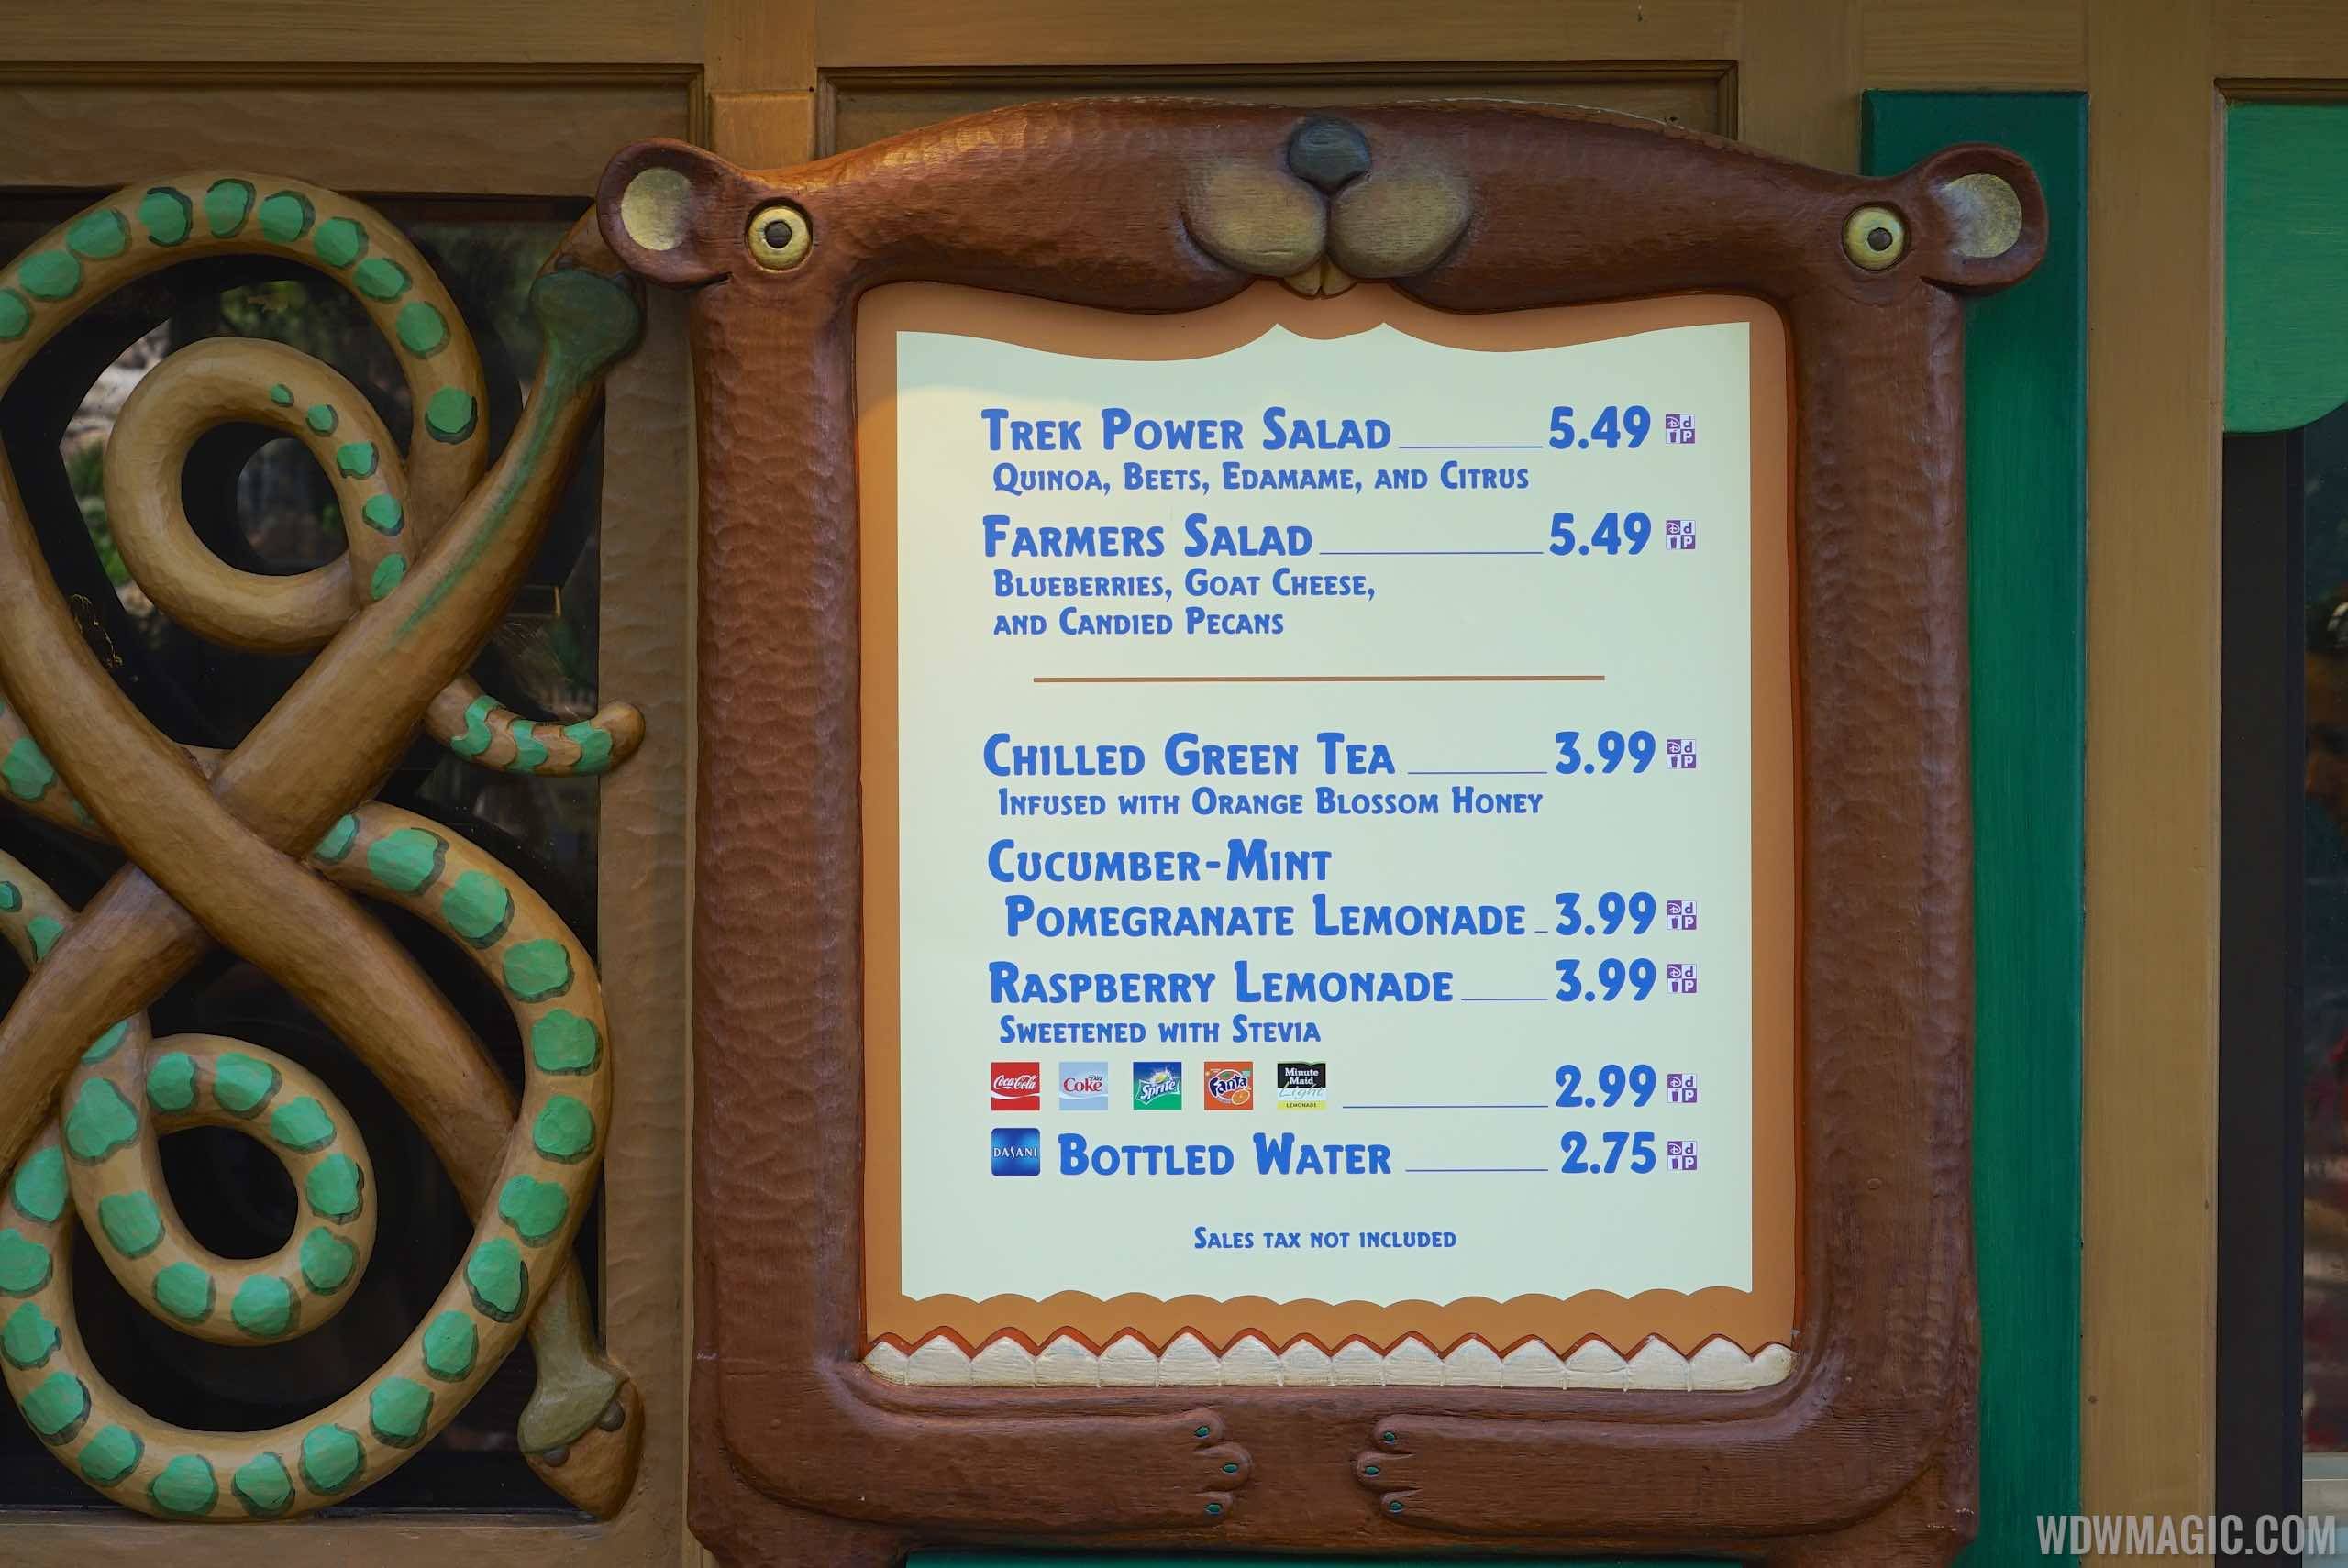 Gardens Kiosk at Disney's Animal Kingdom has a new look and new healthy eating menu